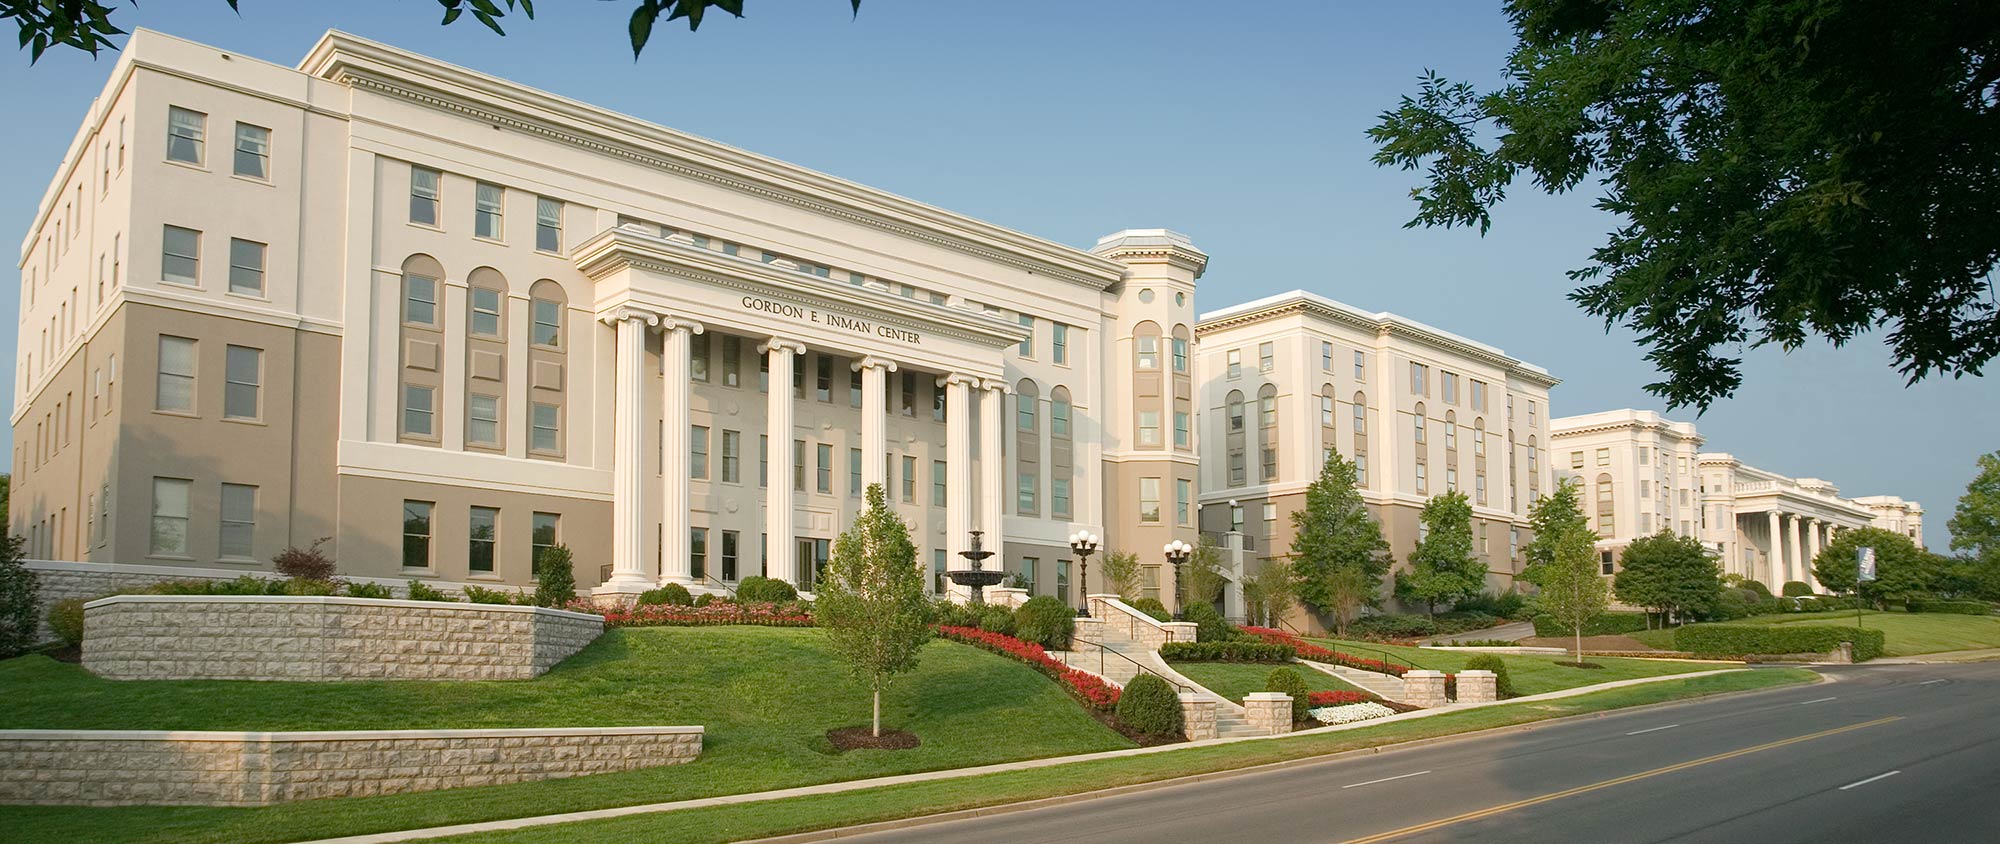 Belmont University Gordon E. Inman Center – College of Health Sciences & Nursing